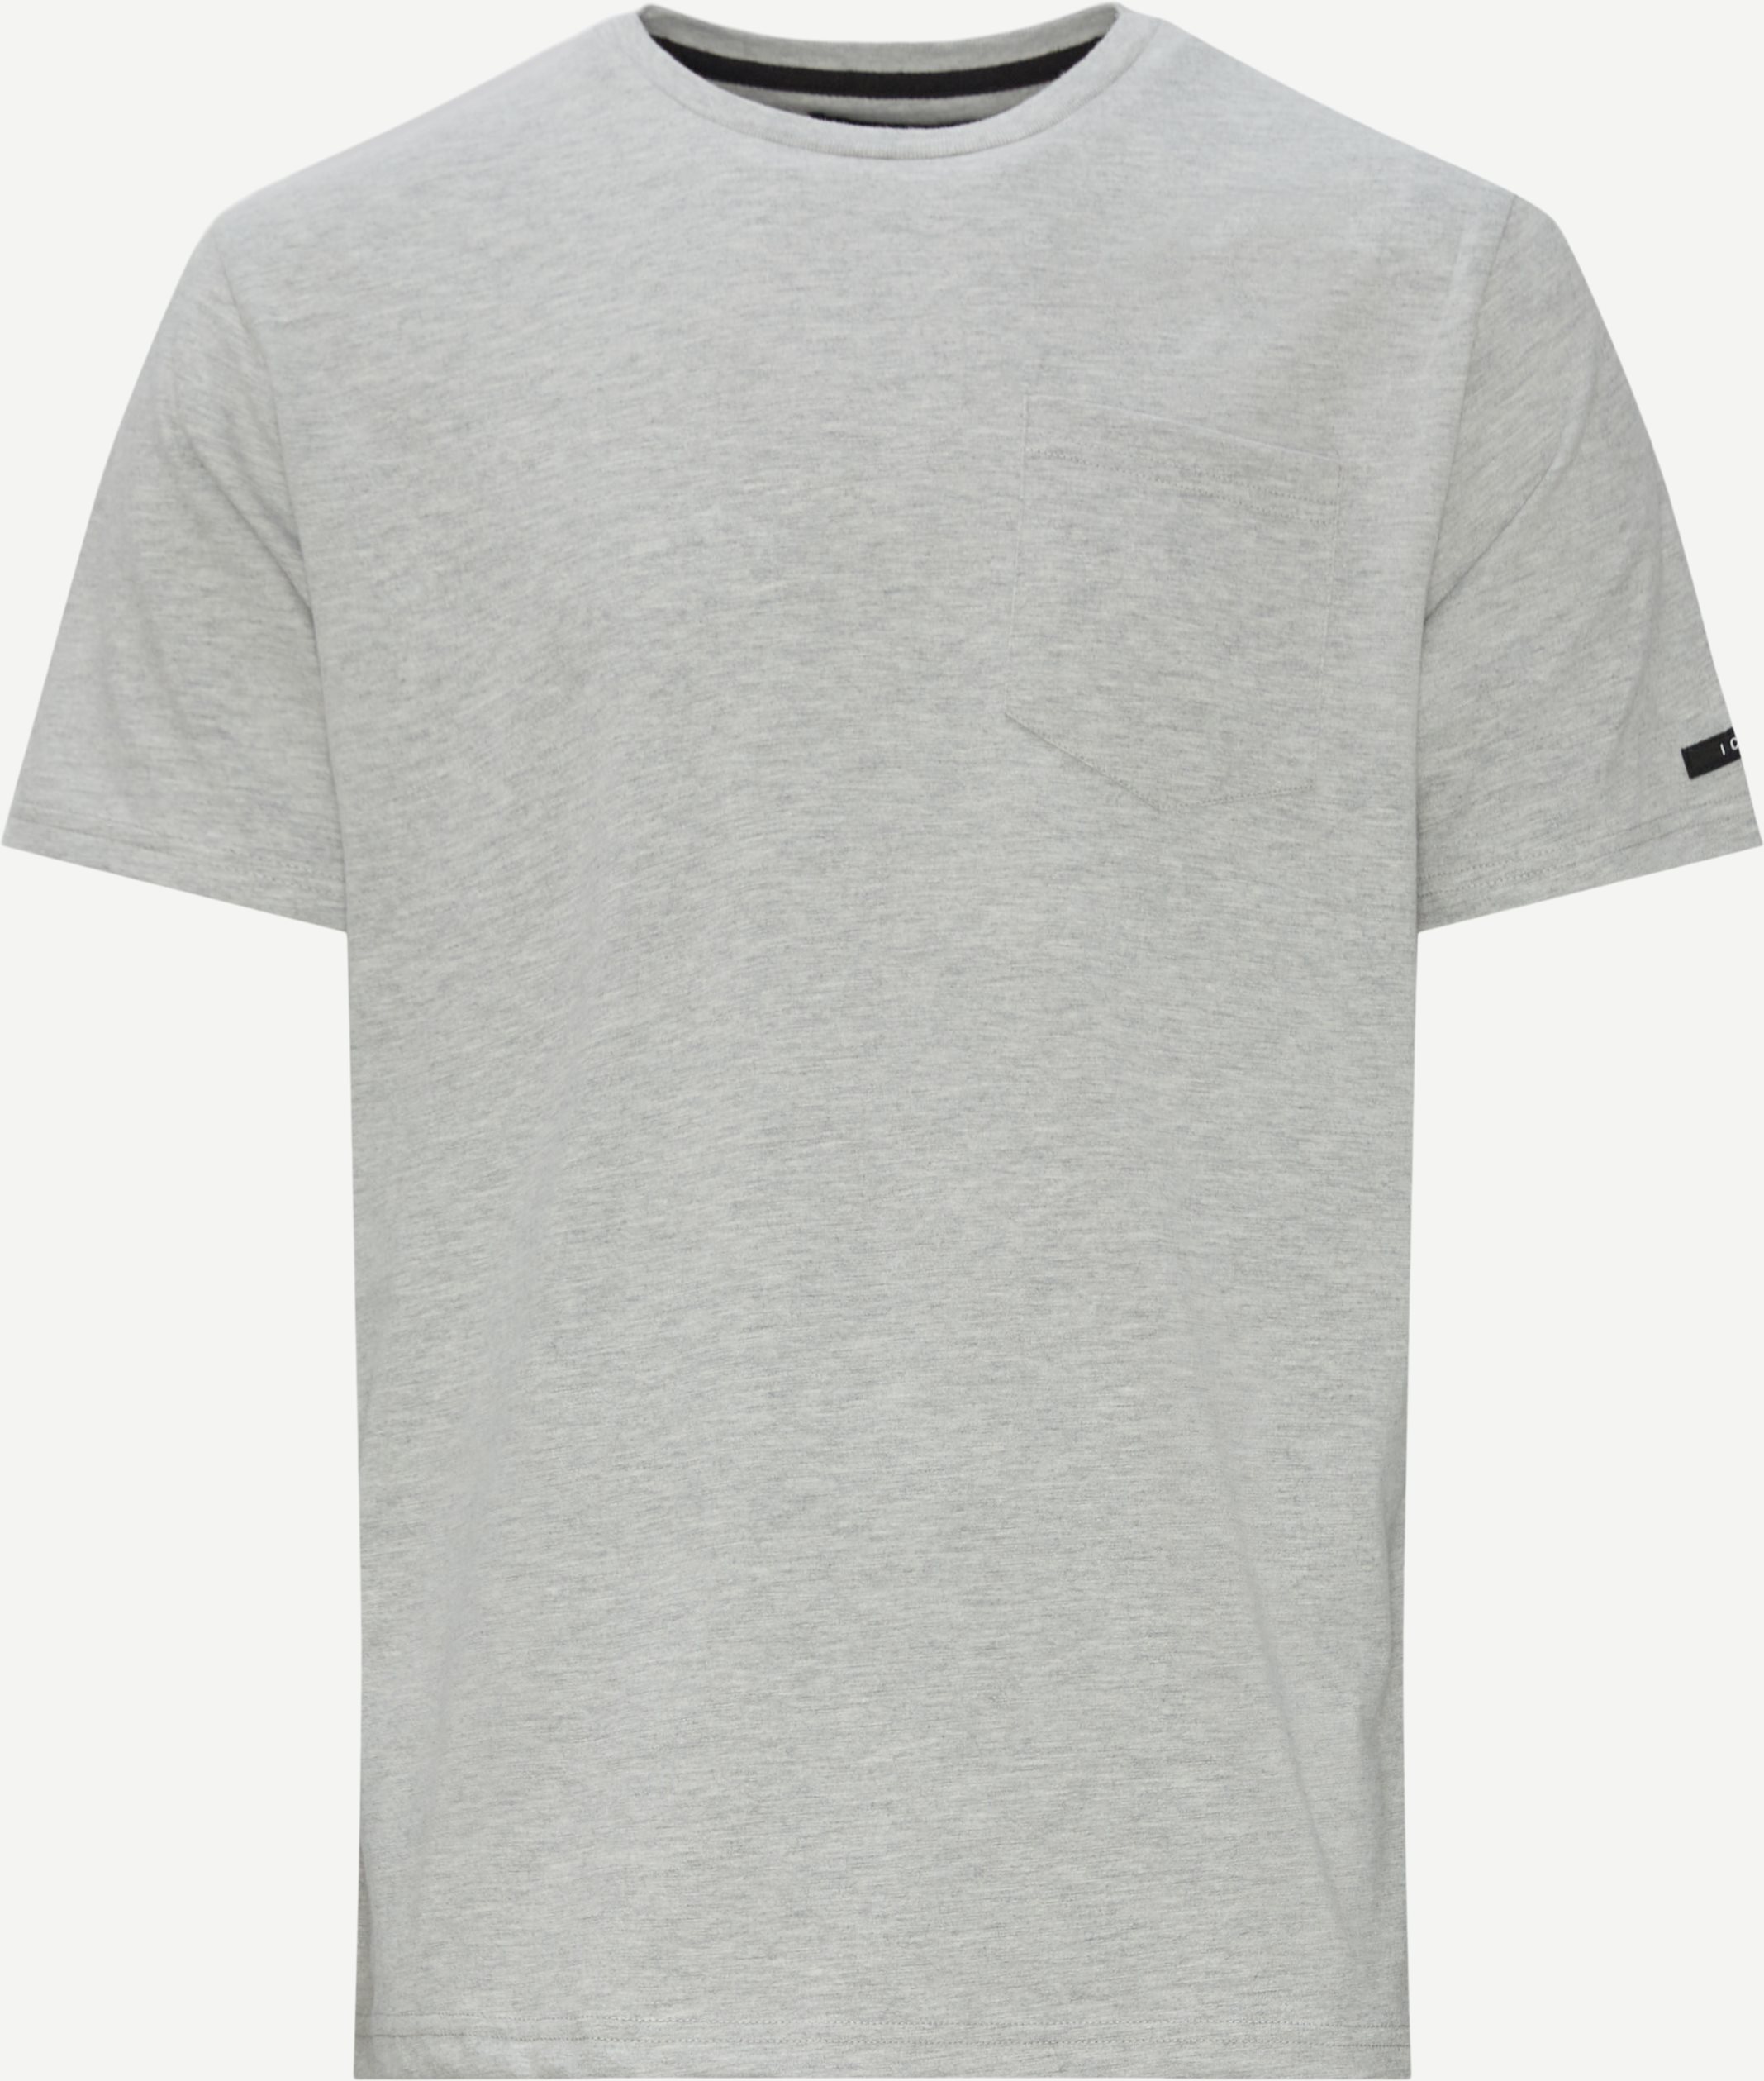 T-shirts - Regular fit - Grå